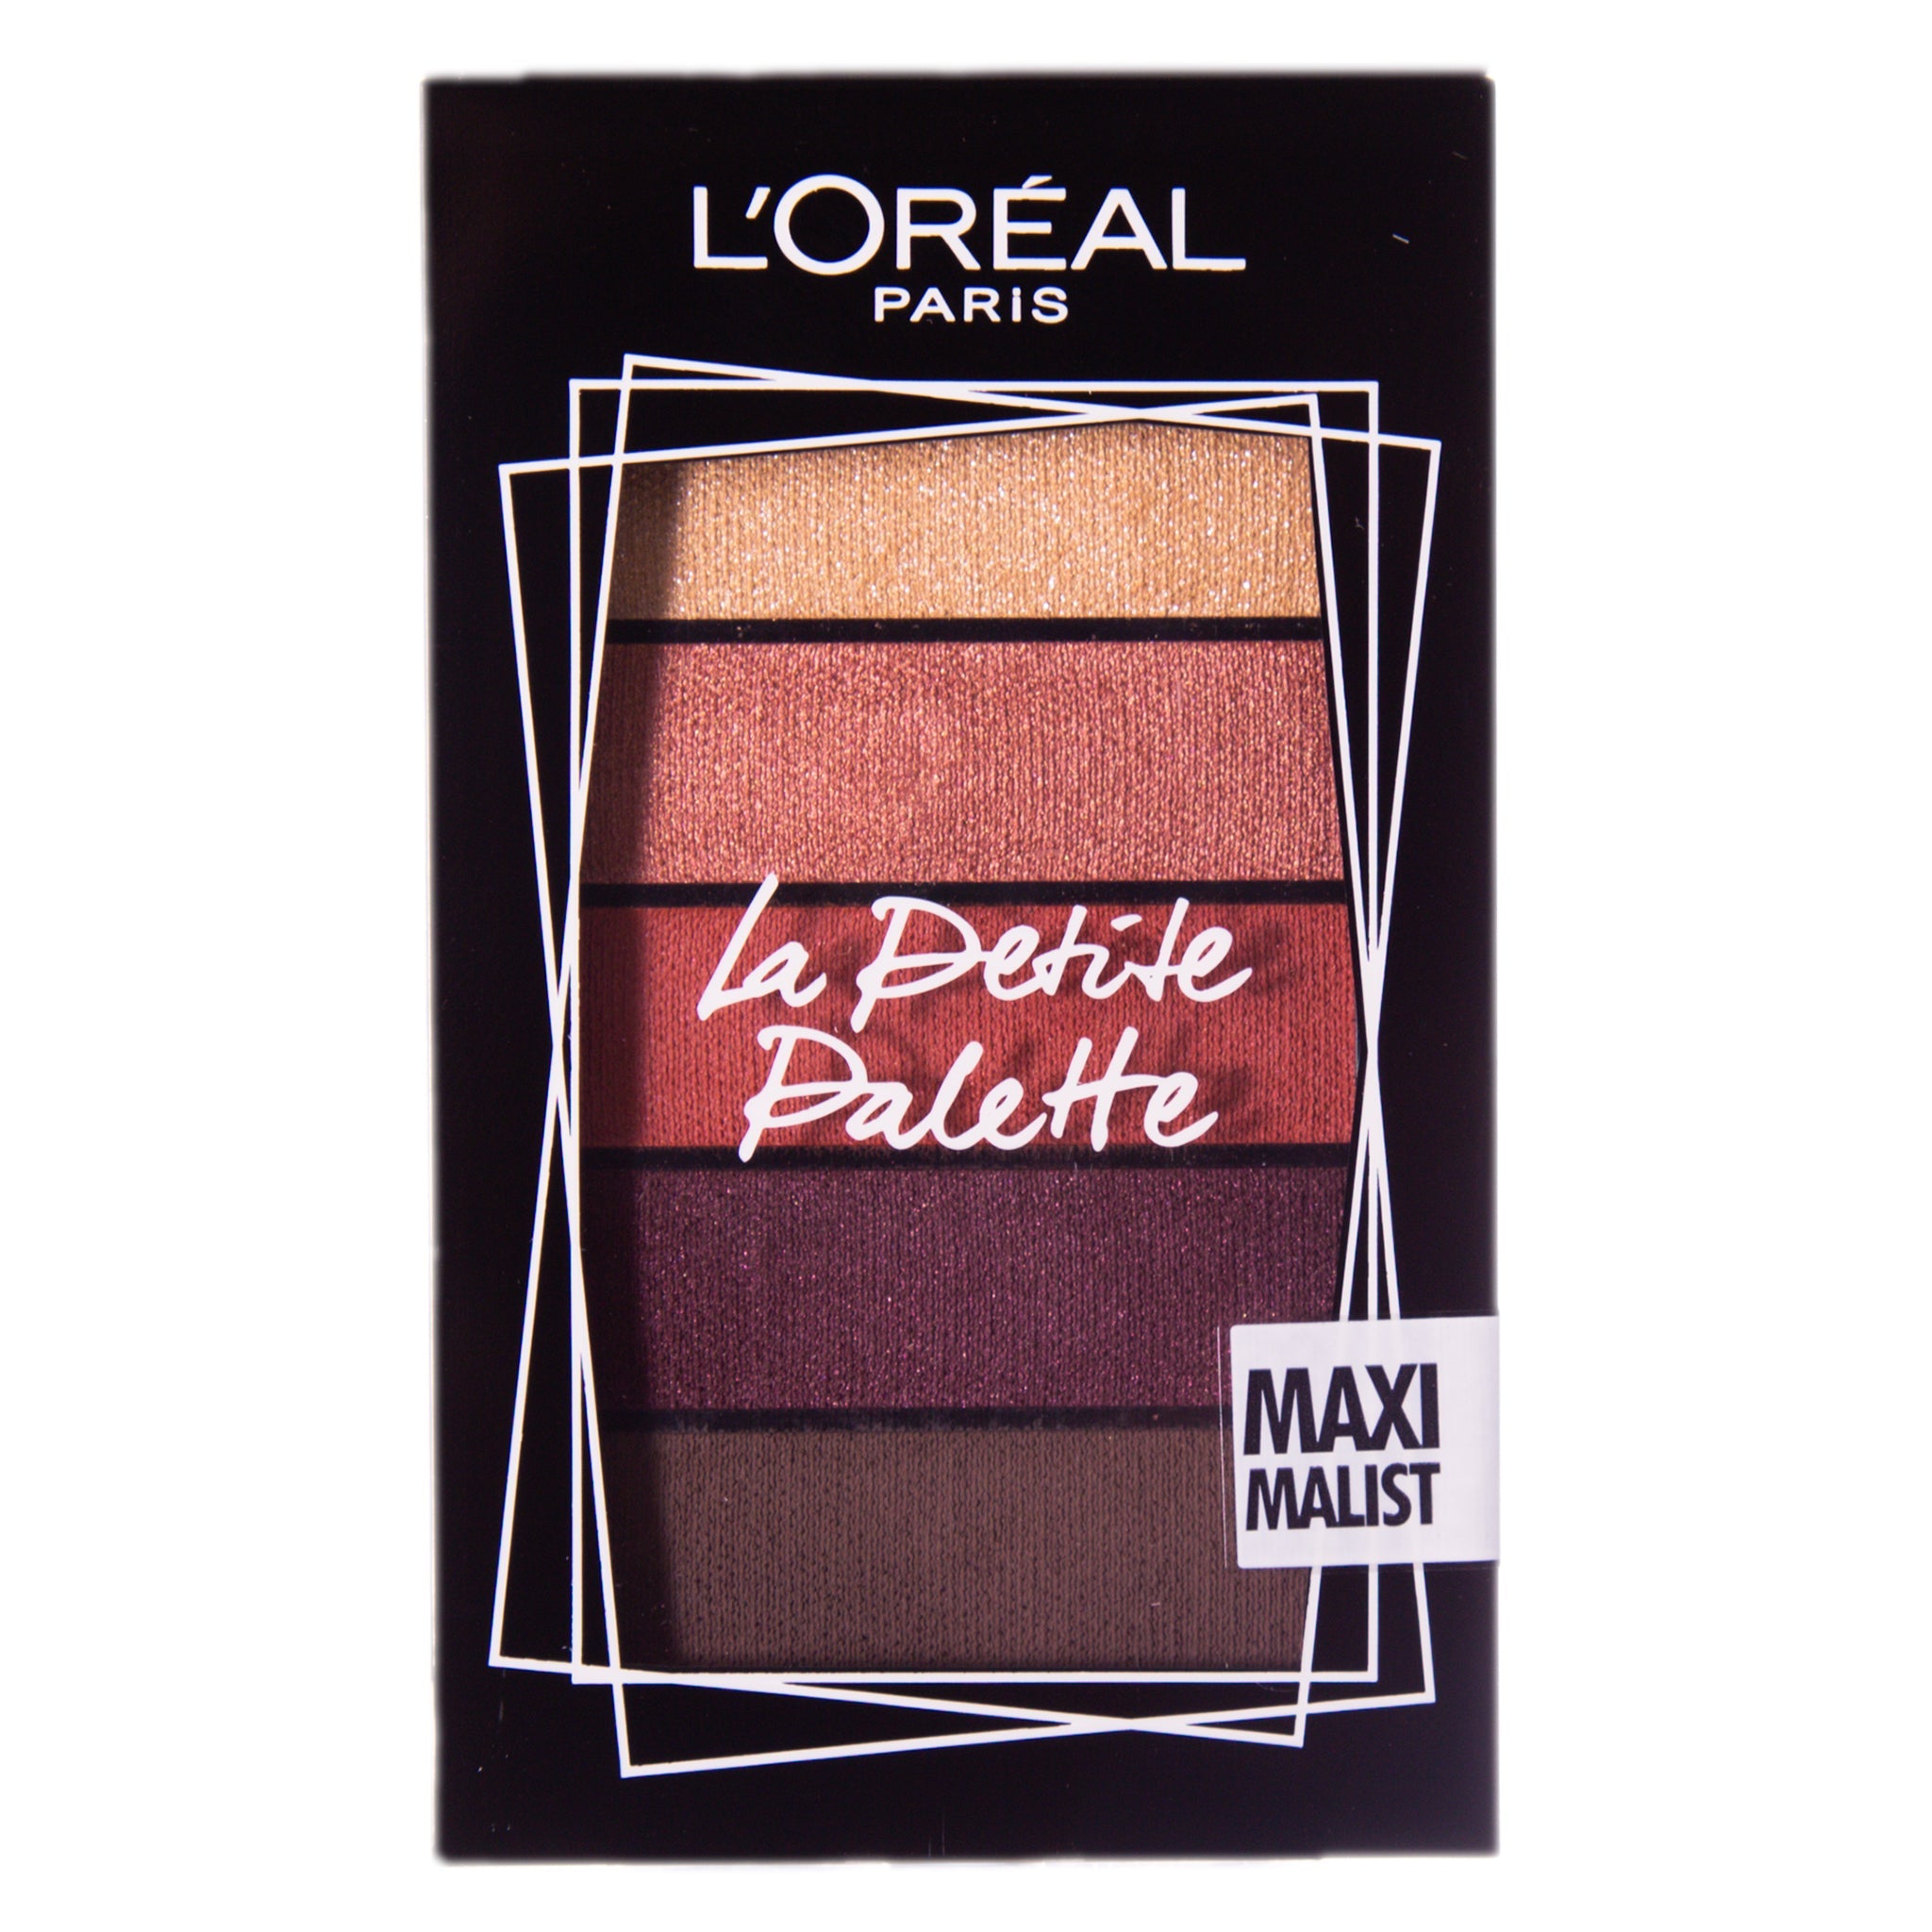 L'Oreal Paris Mini Eyeshadow Palette - Maximalist